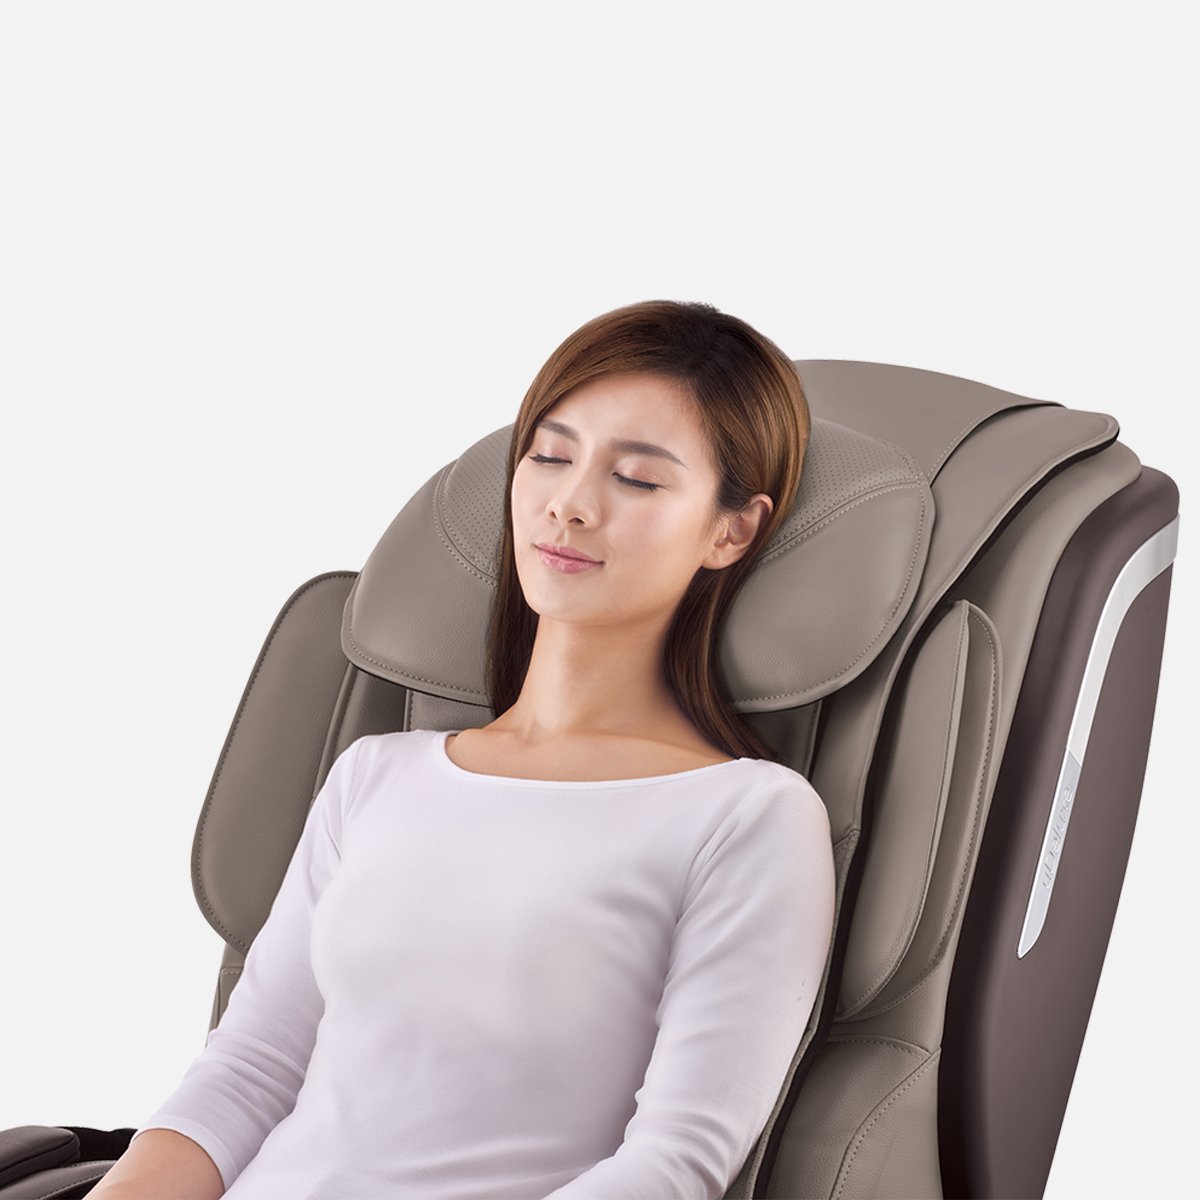 Shiatsu Full Body Massage Chair - osim uDeluxe full body massage chair